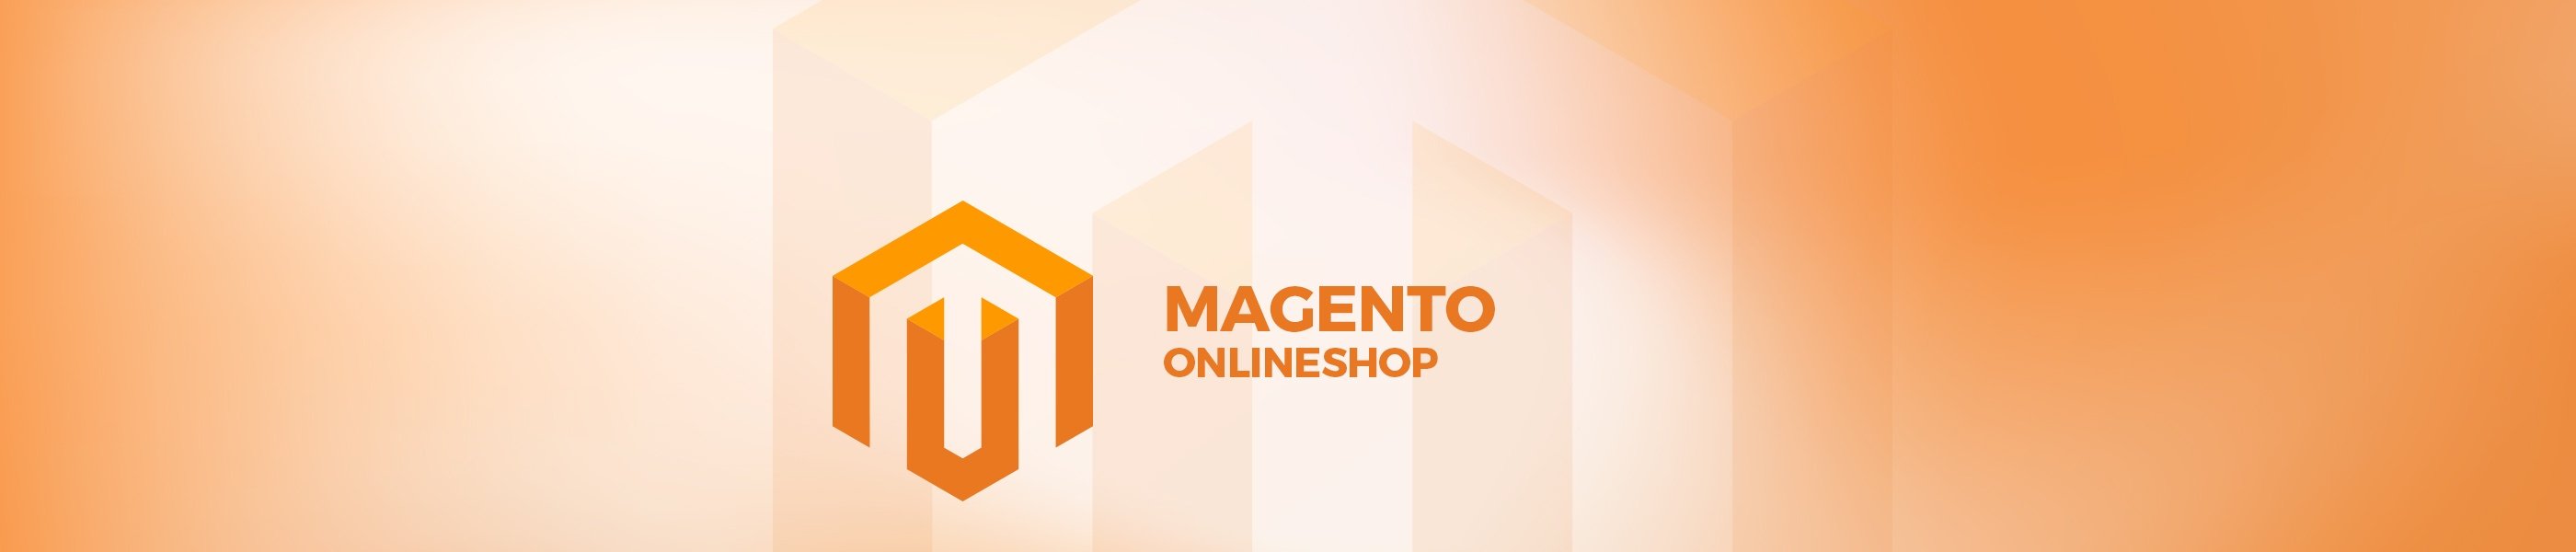 180108_Produkte_Magento